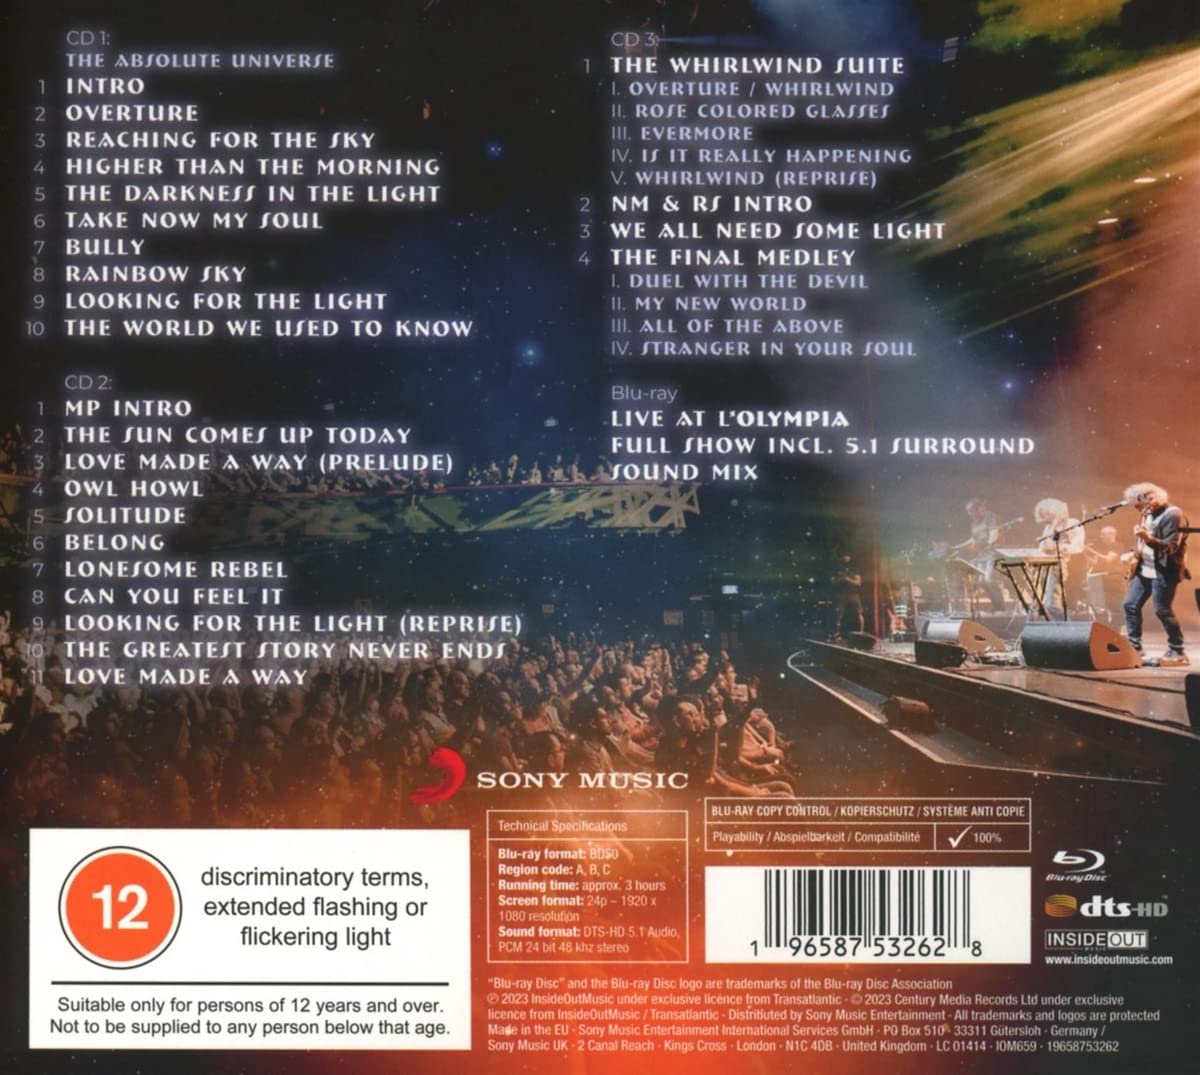 Transatlantic The Final Flight Live At L'Olympia 3CD+Blu-Ray [Importado]